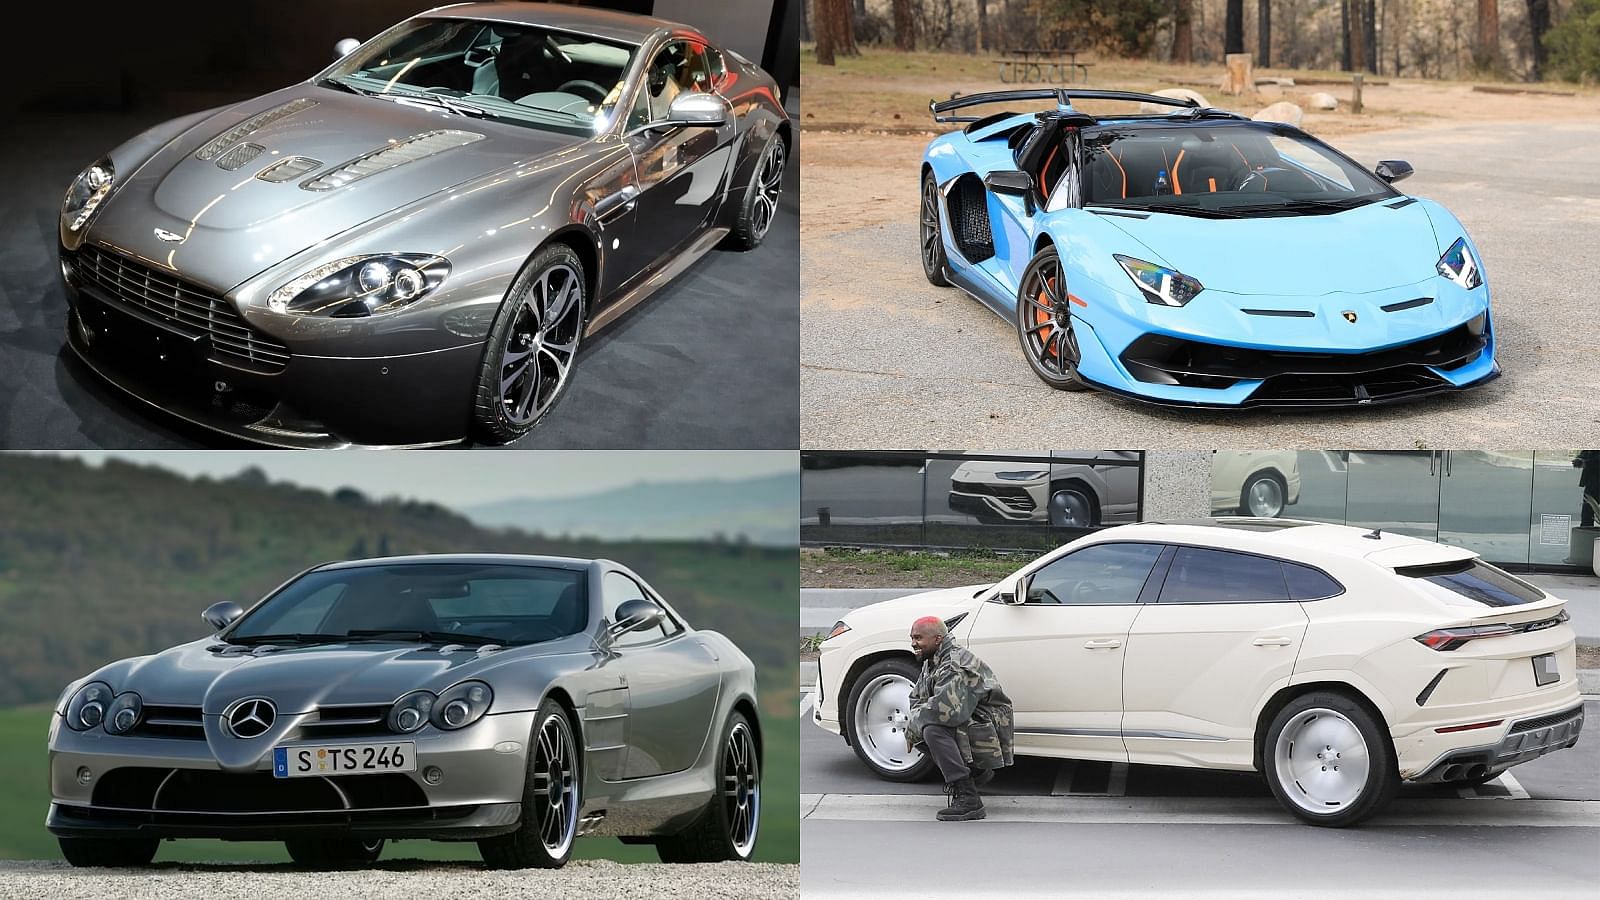 Kanye West's car collection includes Aston Martin, Lamborghini Aventador, Lamborghini Urus, Mercedes-Benz McLaren SLR